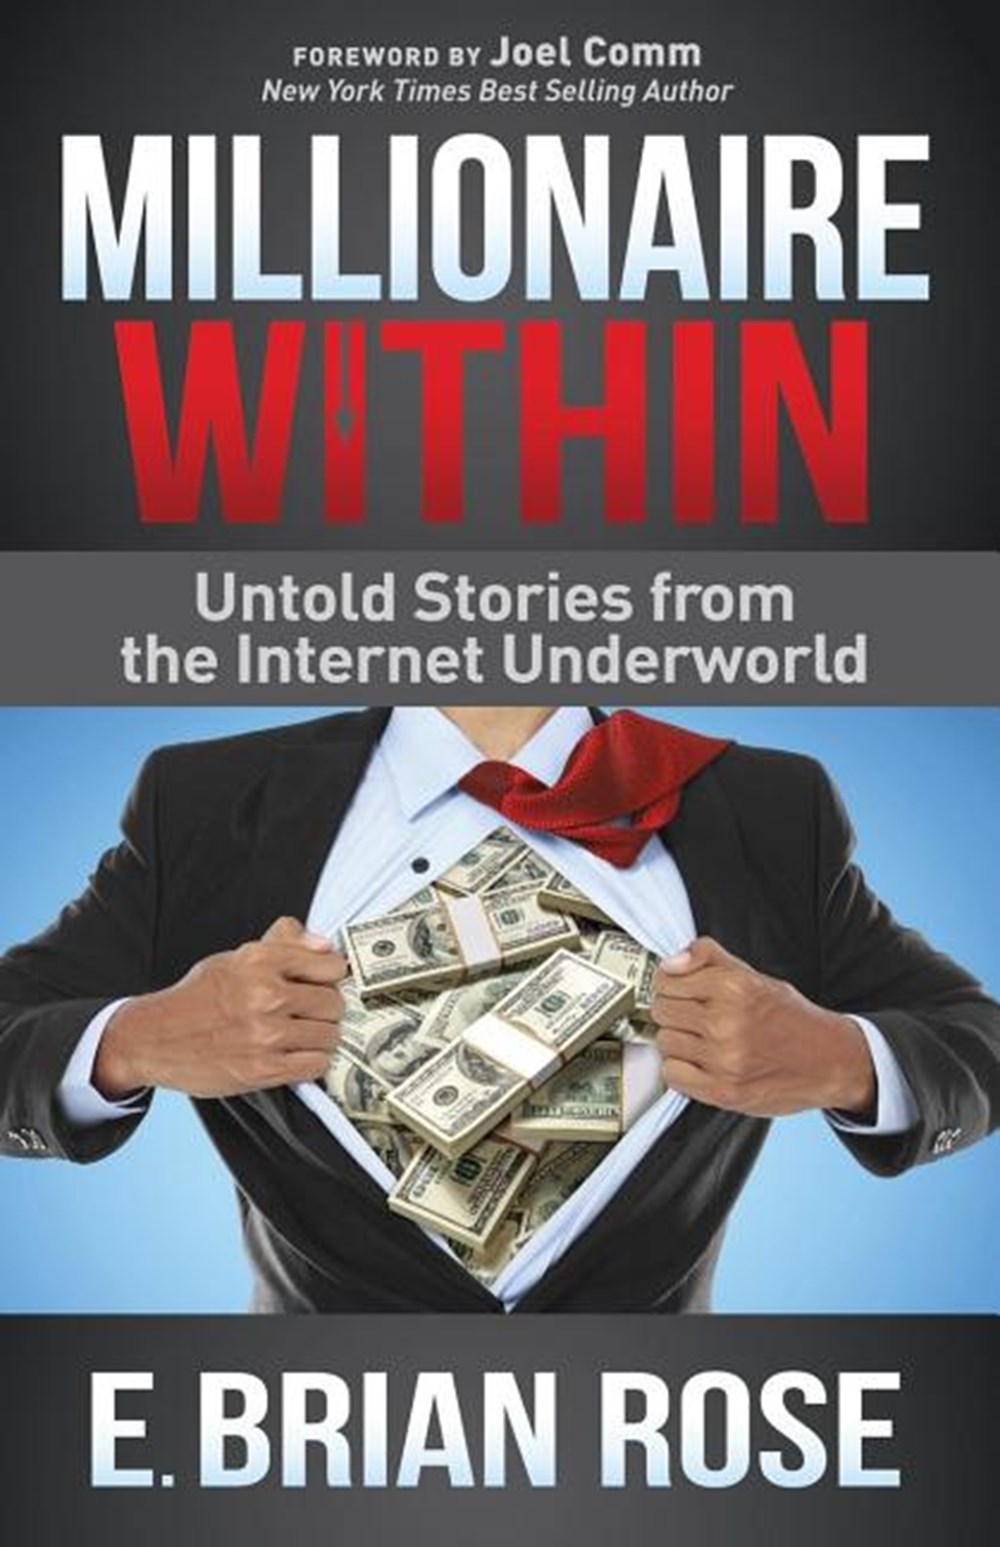 Millionaire Within Untold Stories from the Internet Underworld